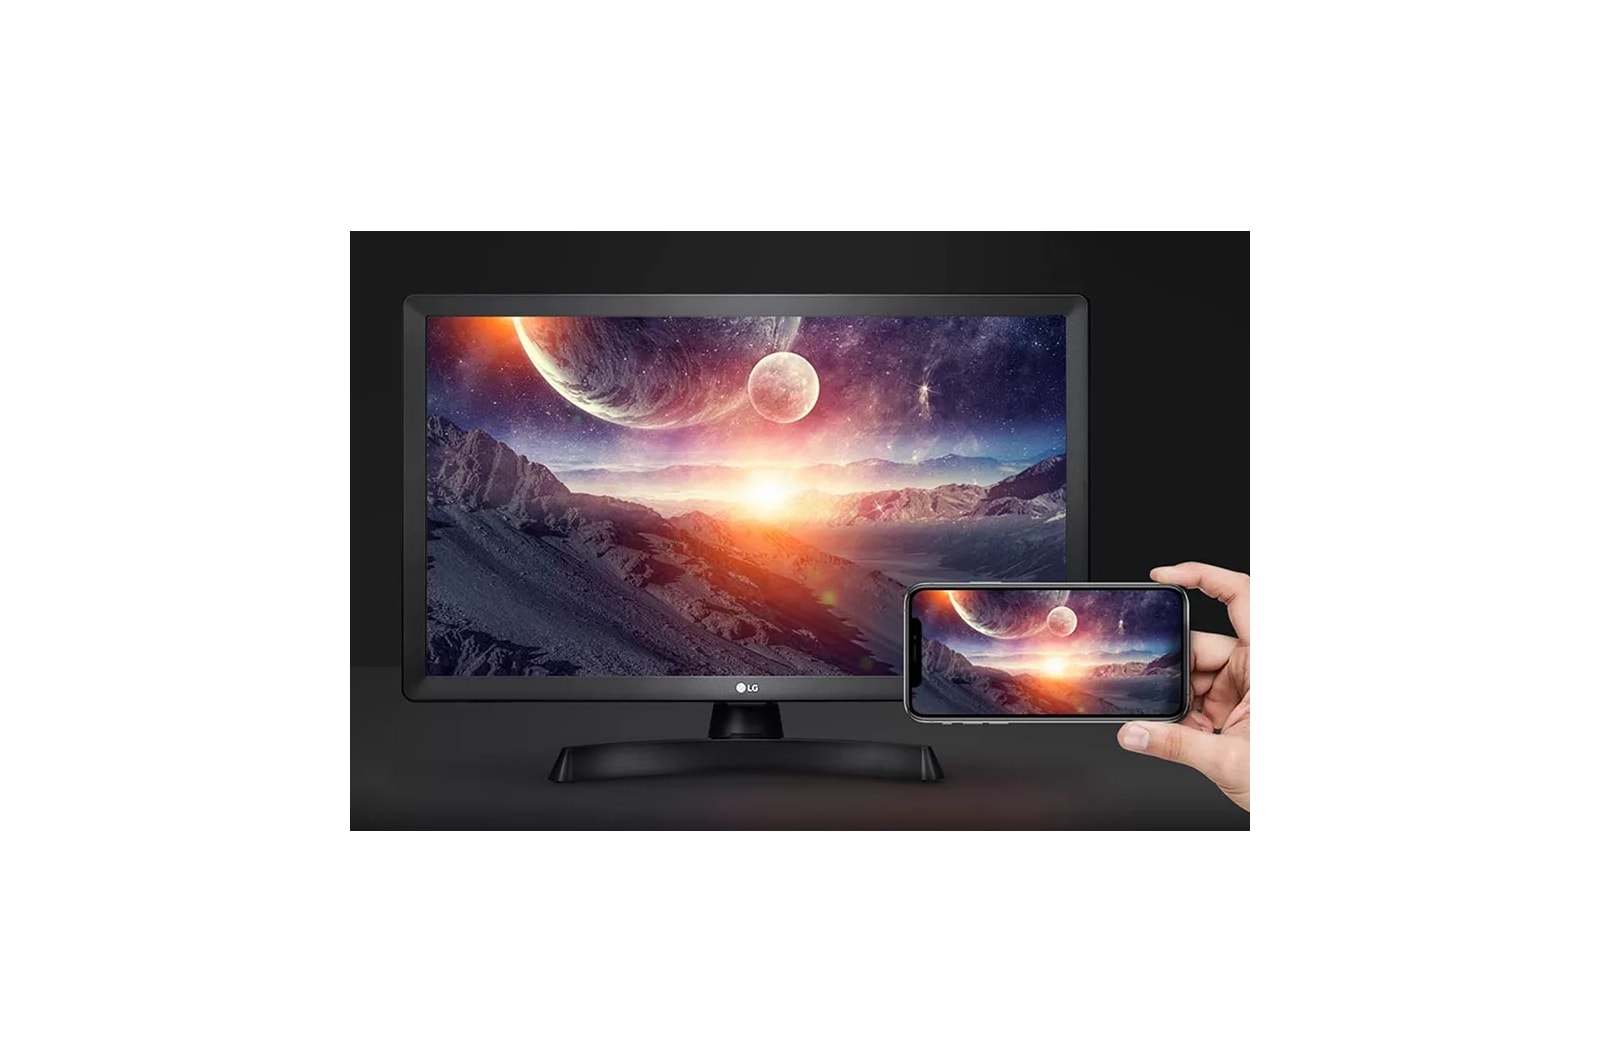  LG 24LQ520S Monitor de TV inteligente LED HD WebOS de